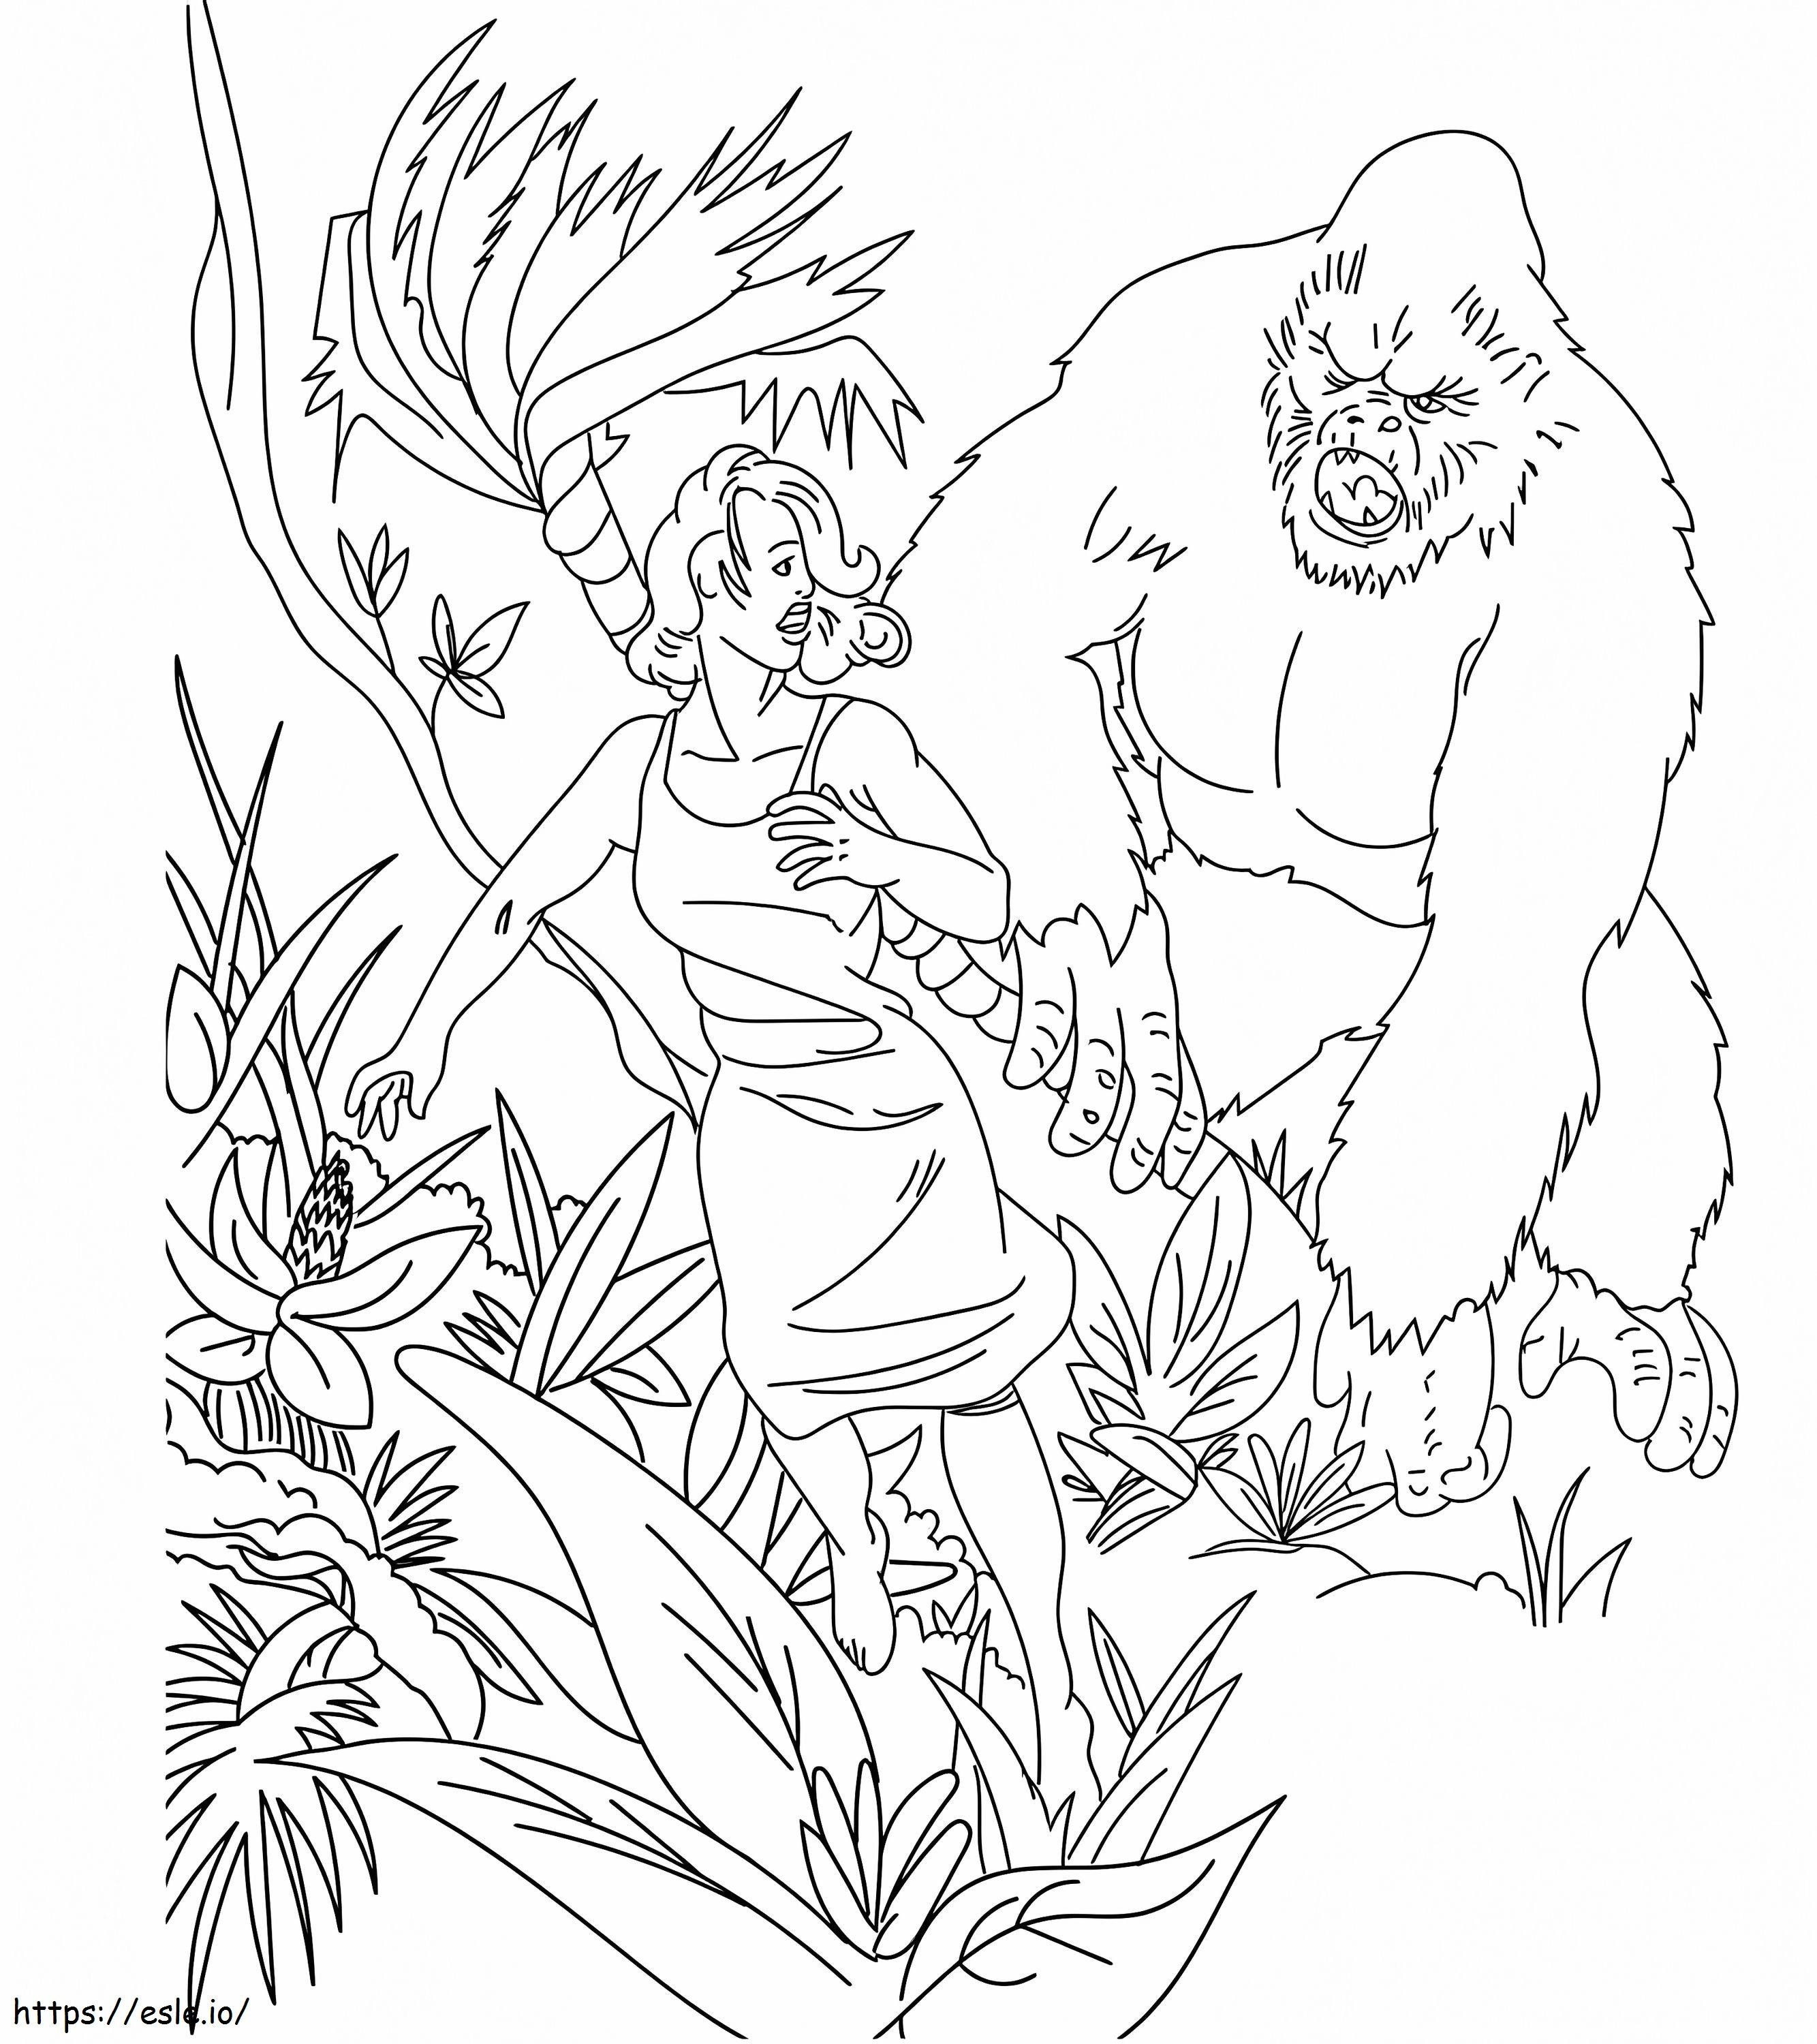 King Kong e mulher para colorir